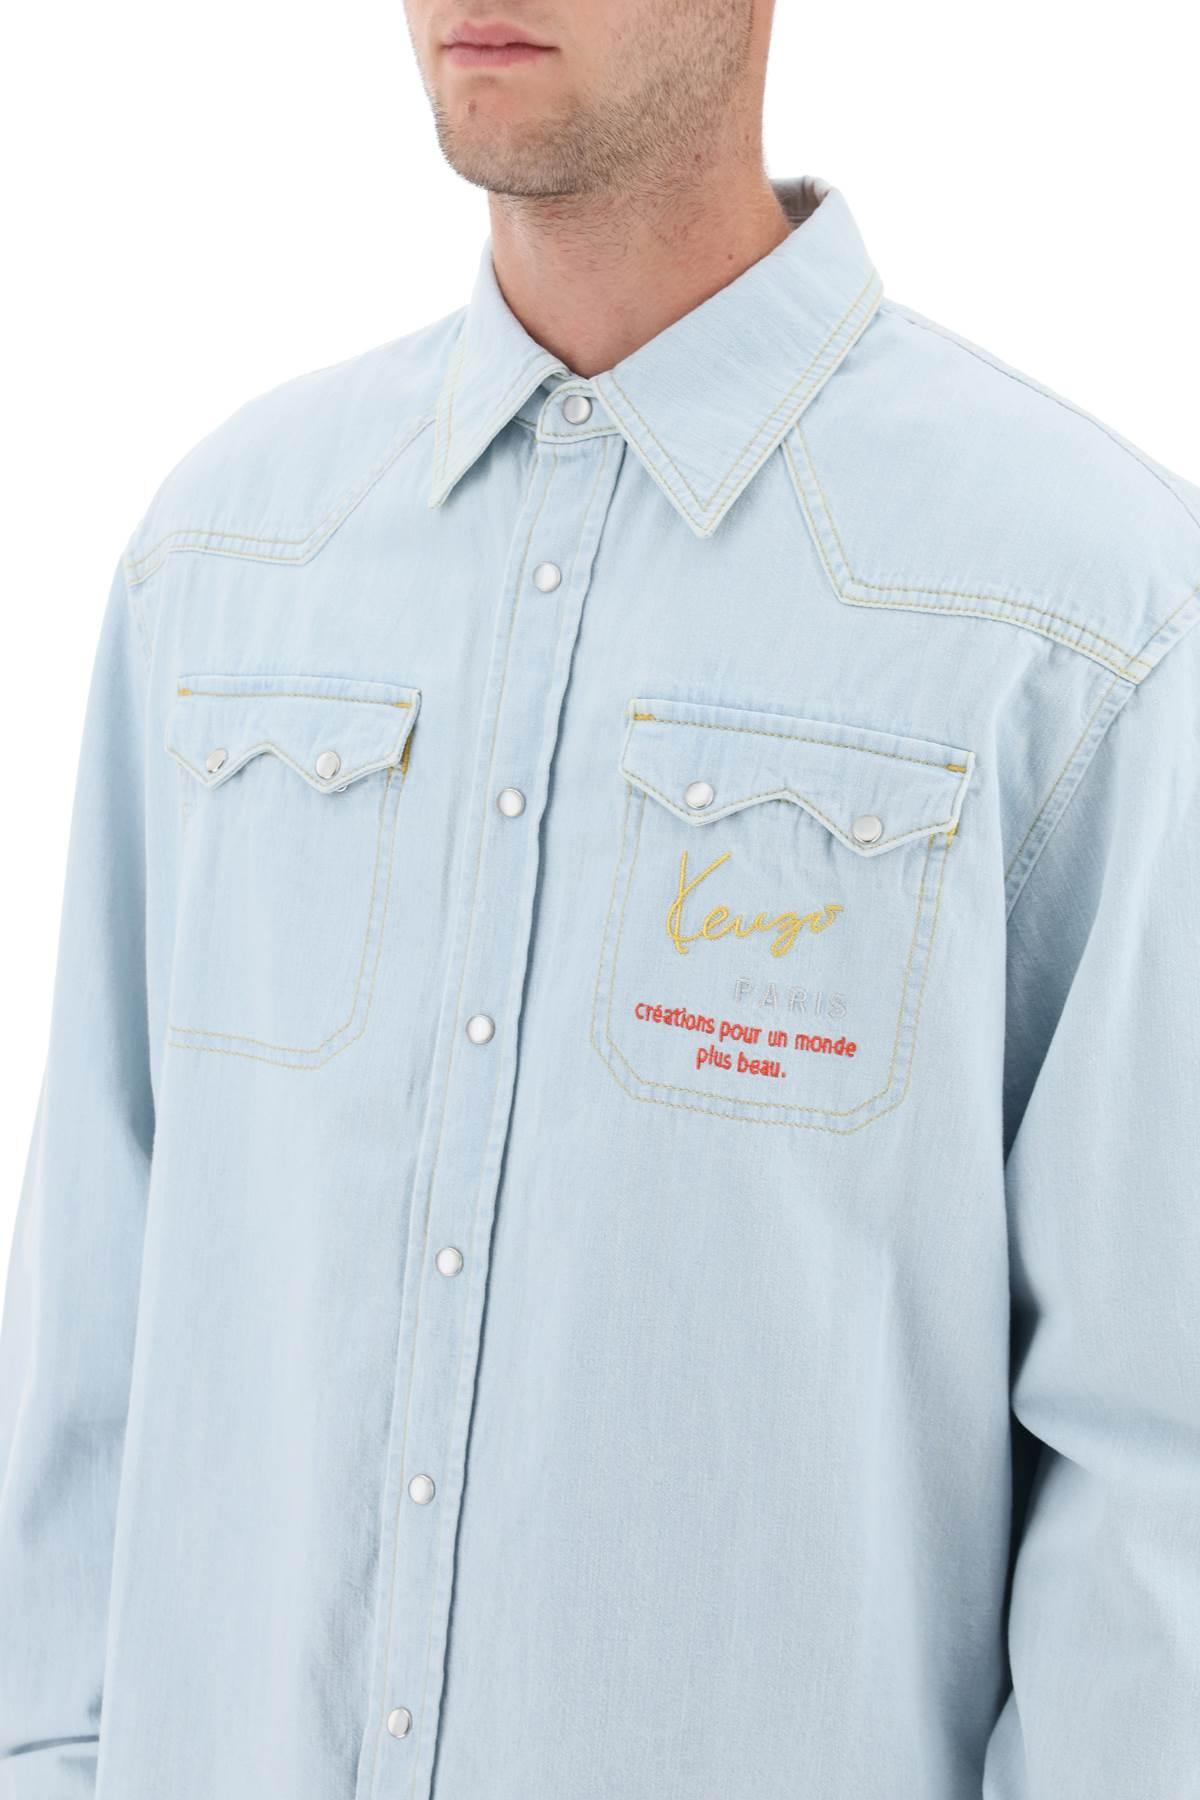 KENZO 'monogram' Denim Cowboy Shirt in Blue for Men